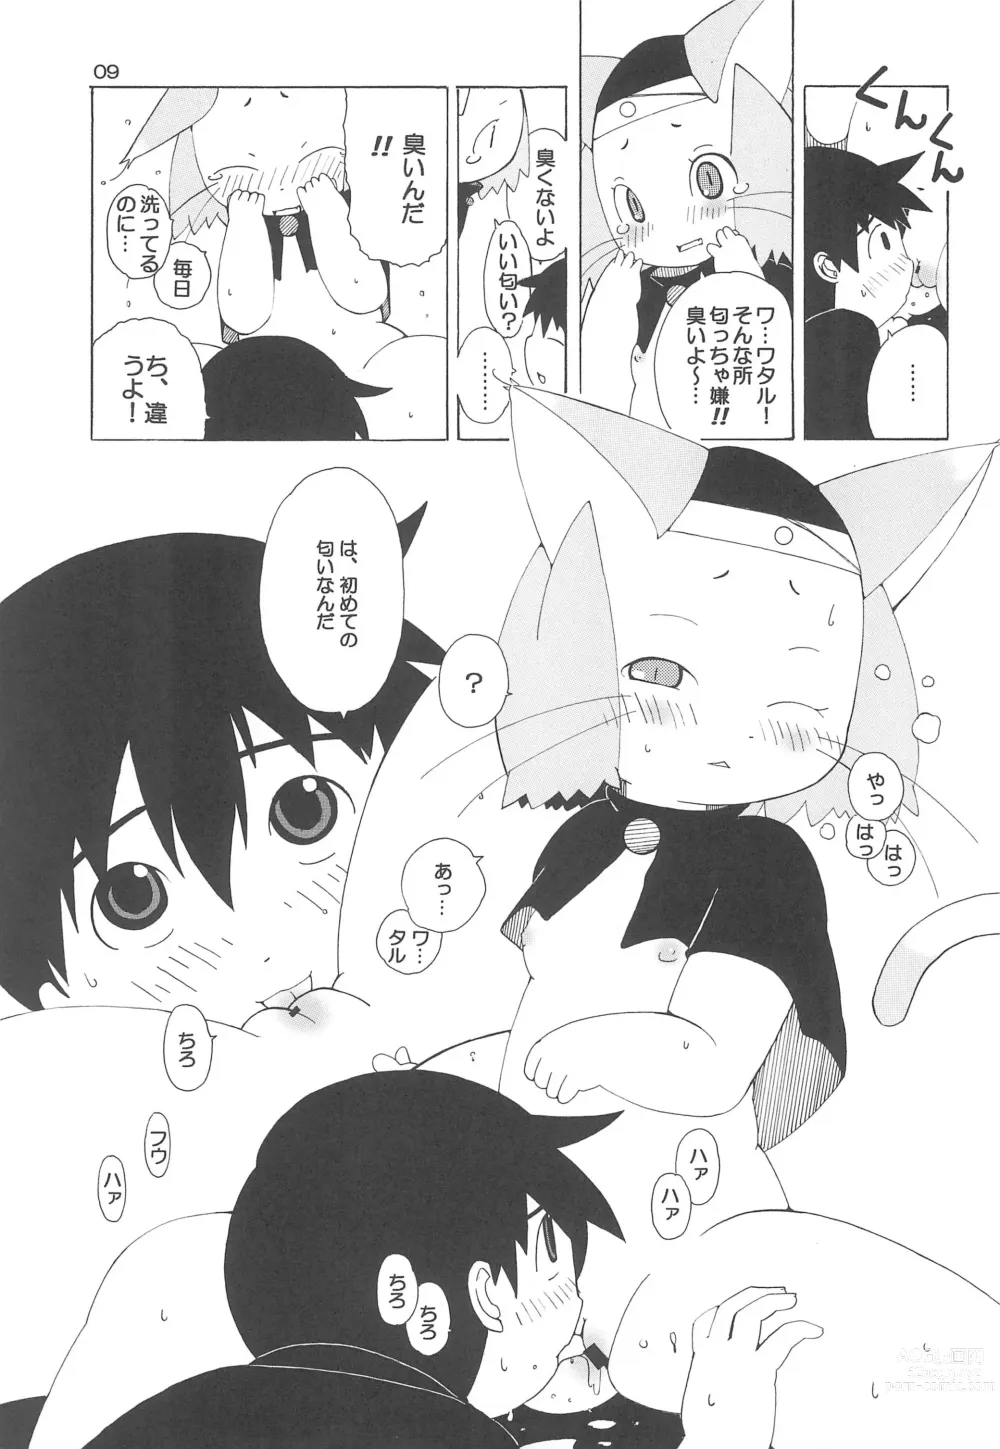 Page 9 of doujinshi Watamii!